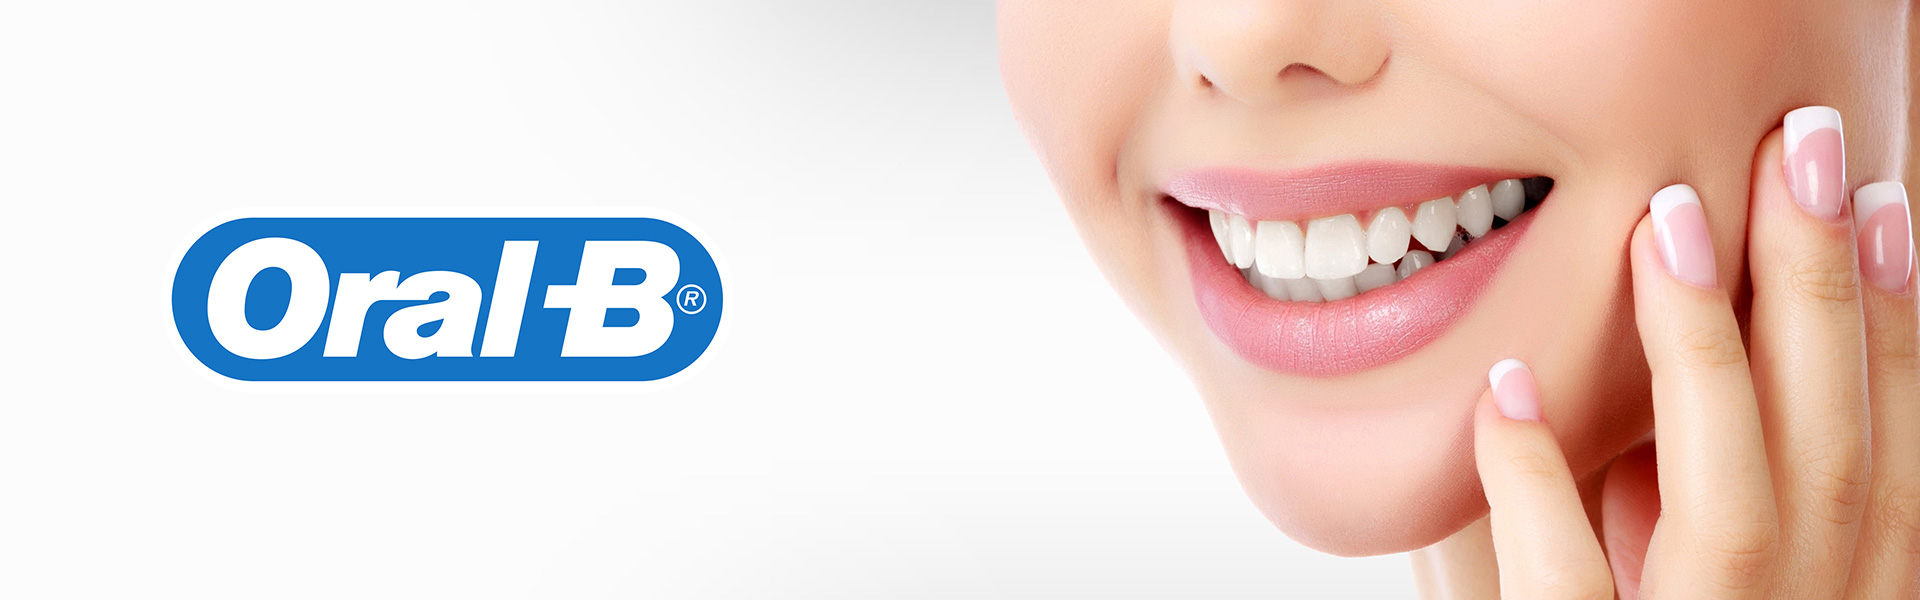 Зубная щетка для детей Oral-B Stages 3 Soft, 5-7 лет Oral-B